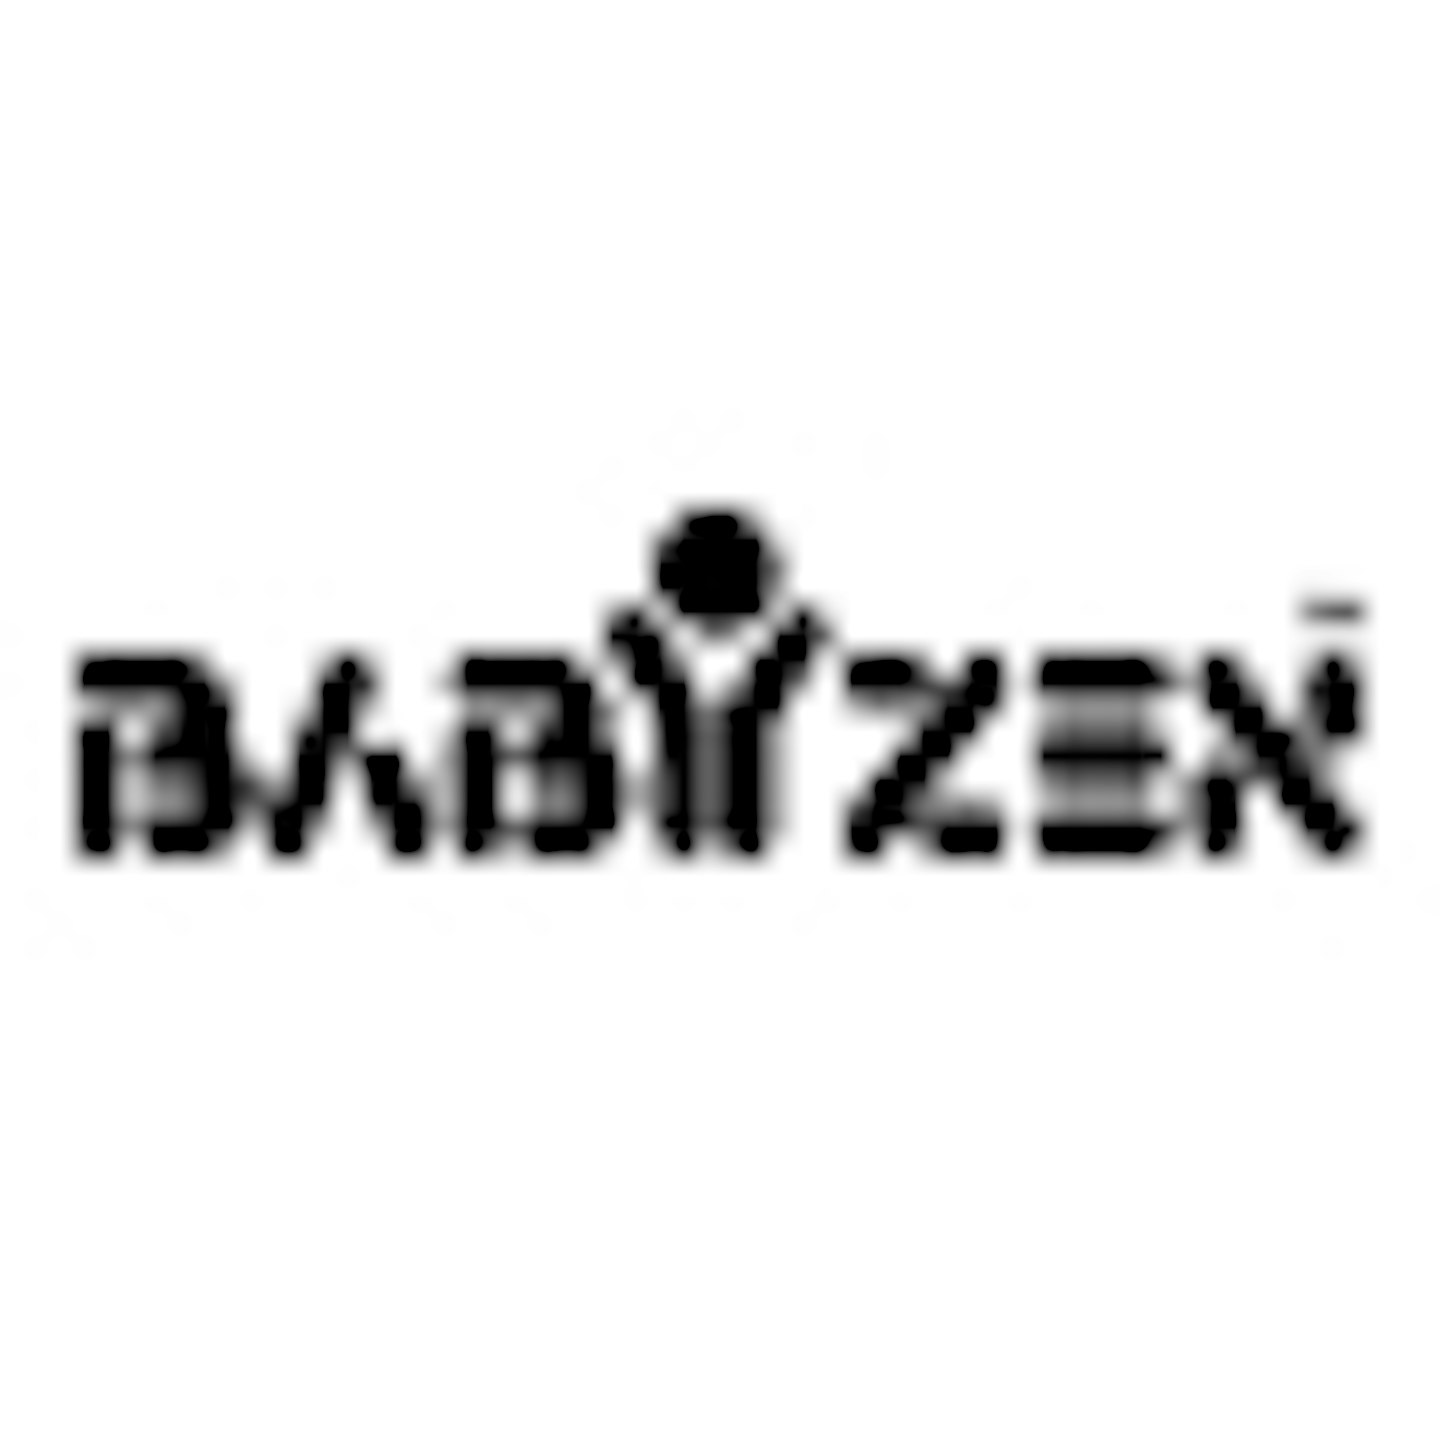 BABYZEN logo